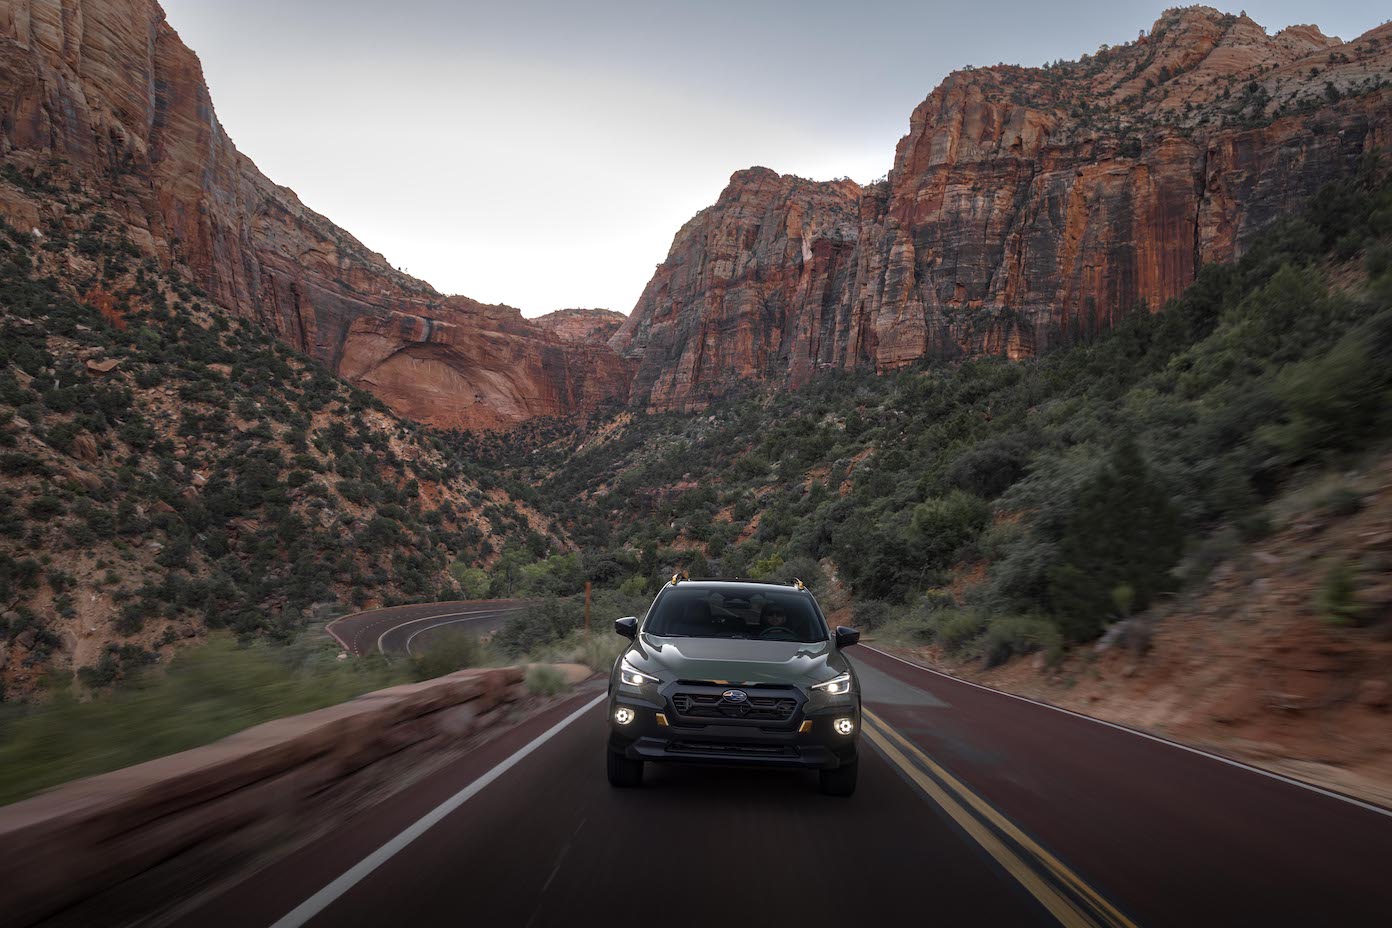 The most popular Subaru SUV, the Subaru Crosstrek, driving in a canyon.